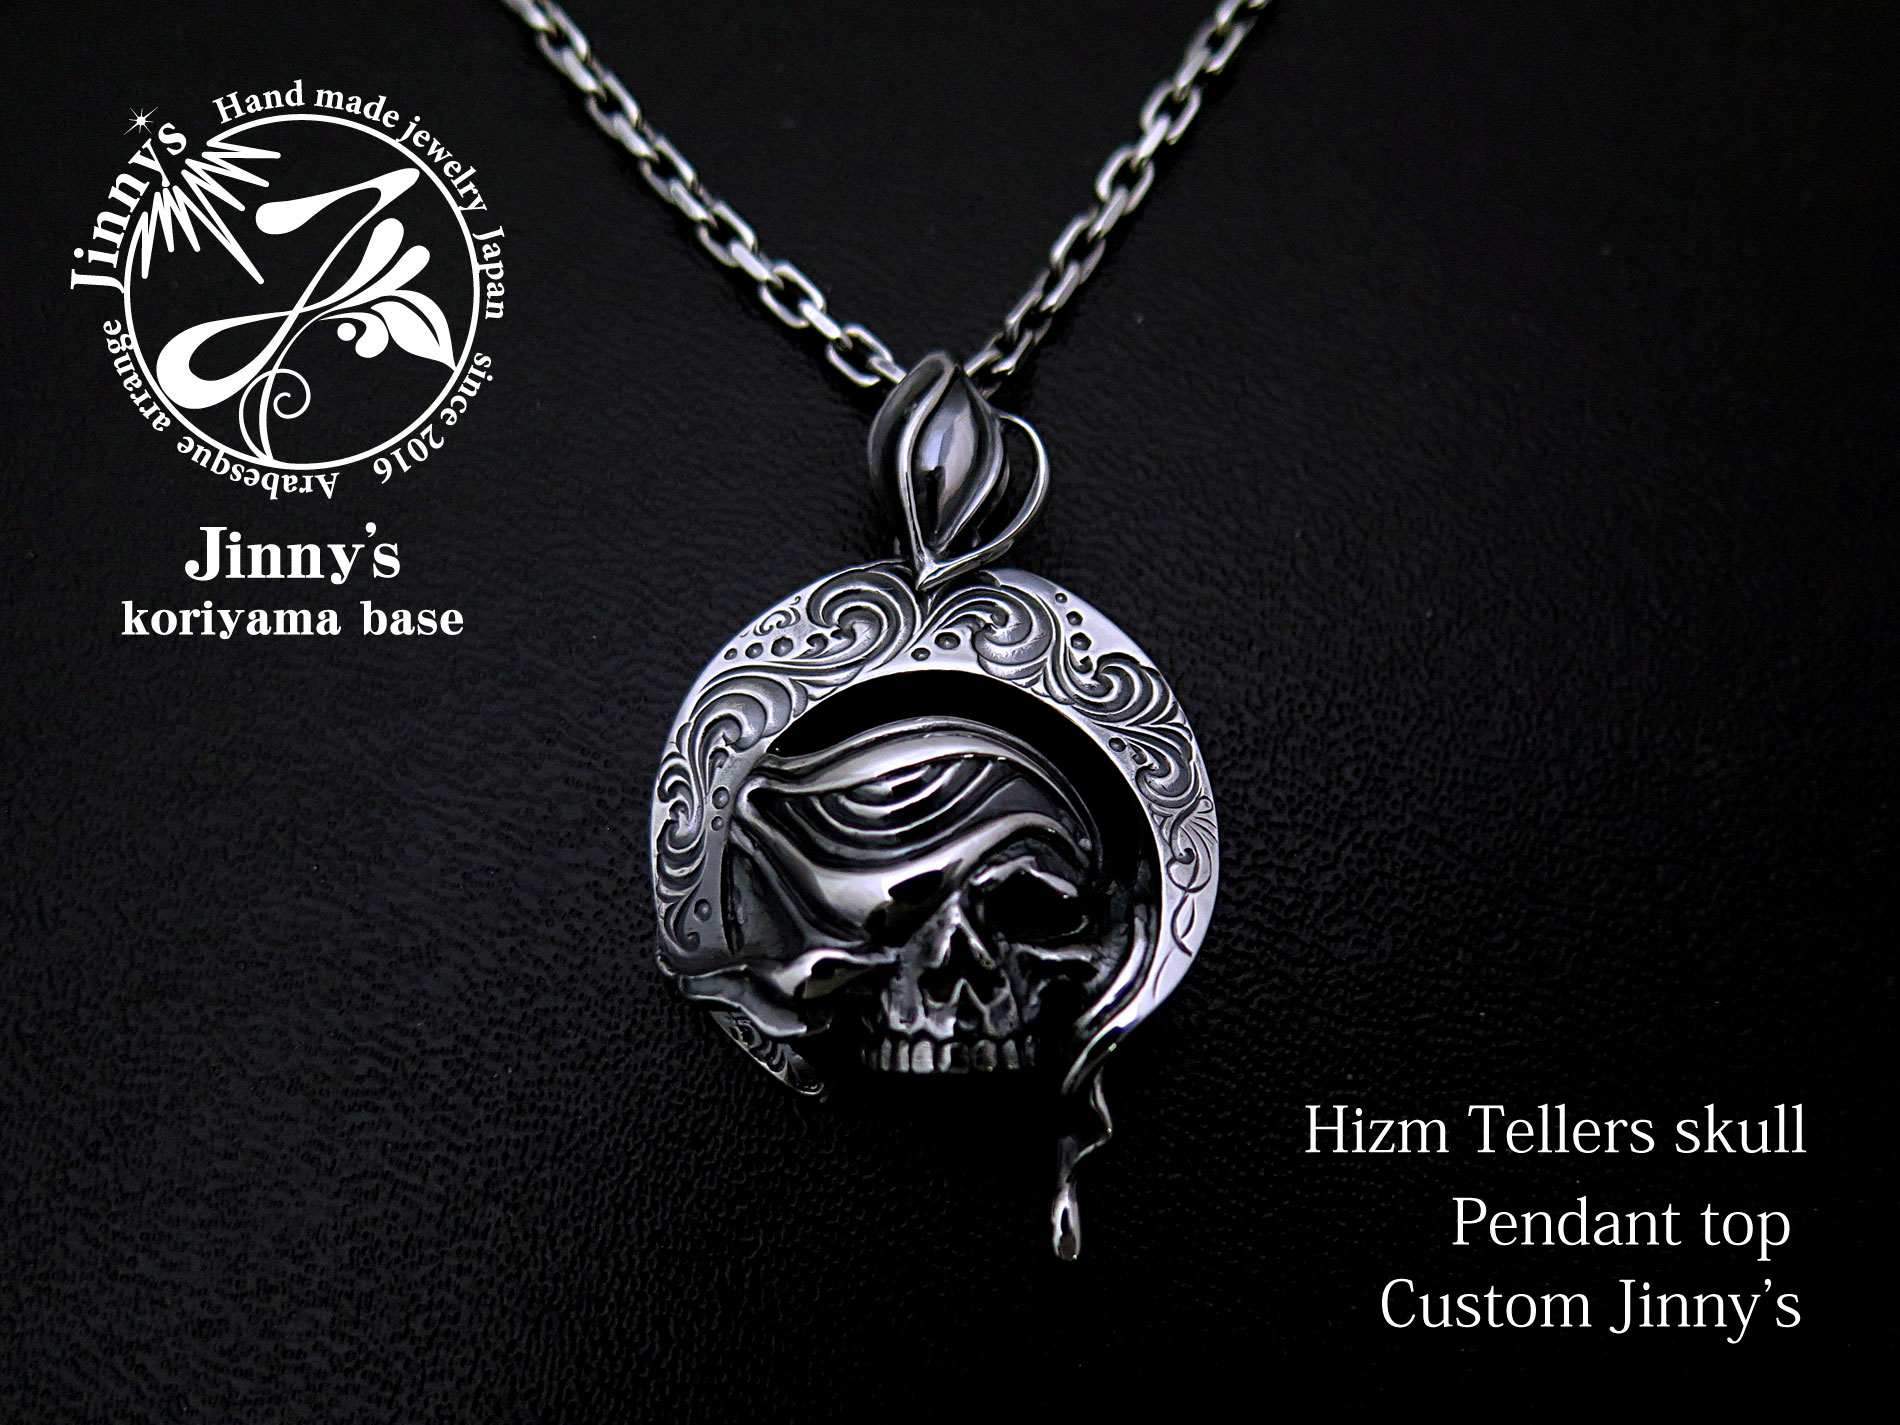 Hizm Tellers skull pendant top Custom Jinny's